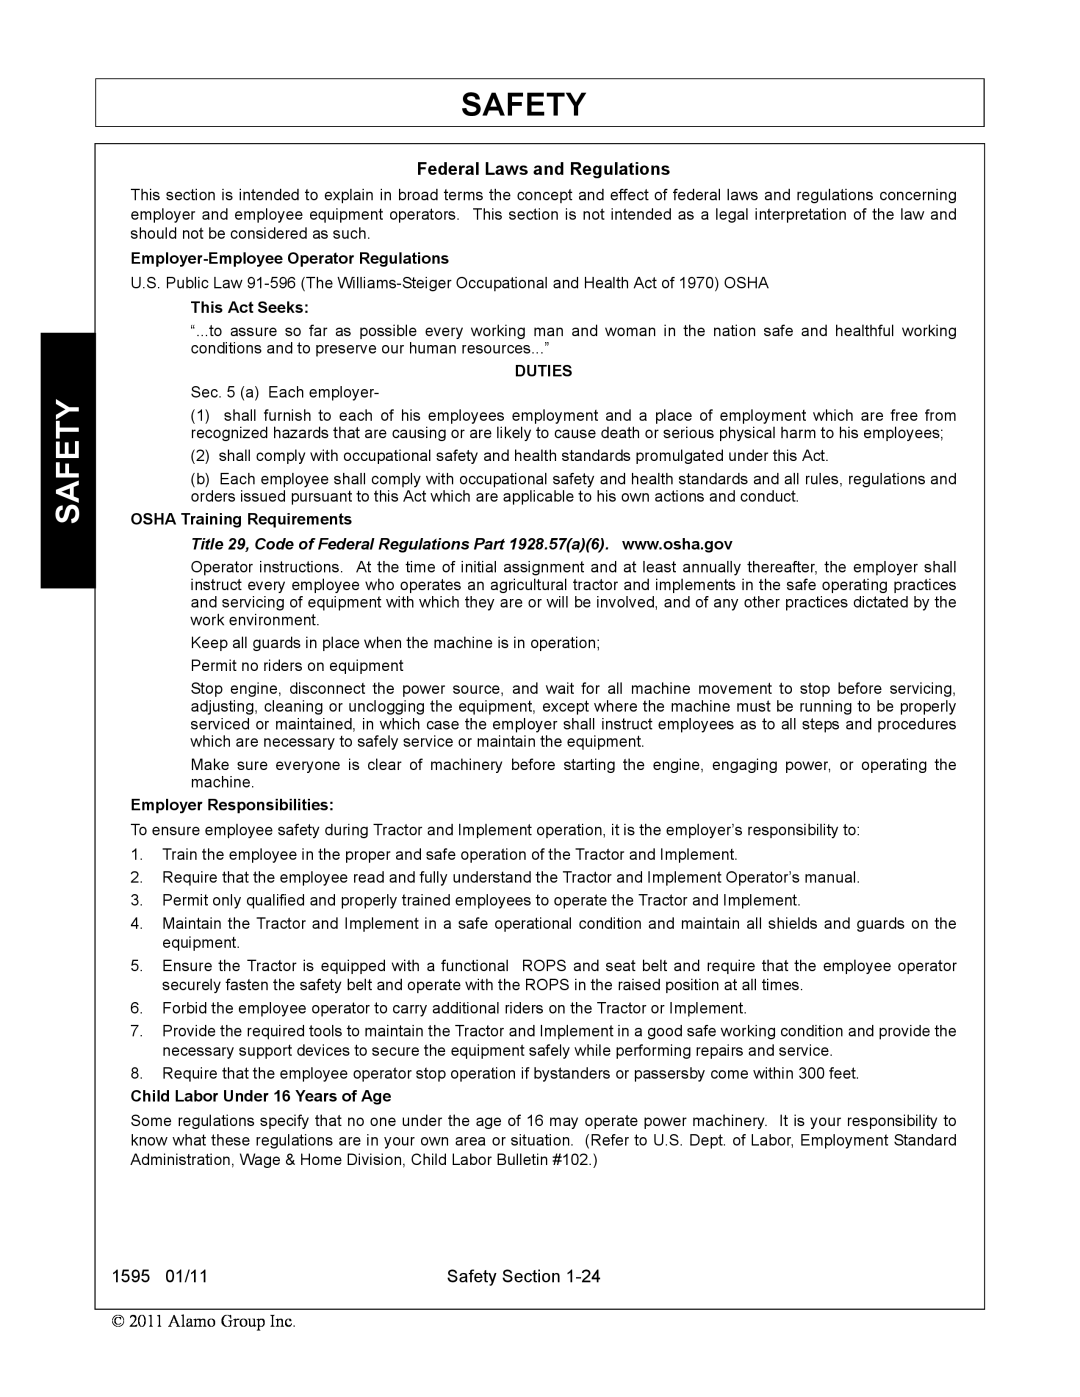 Alamo 1595 manual Safety, Employer-Employee Operator Regulations, This Act Seeks, Duties, OSHA Training Requirements 